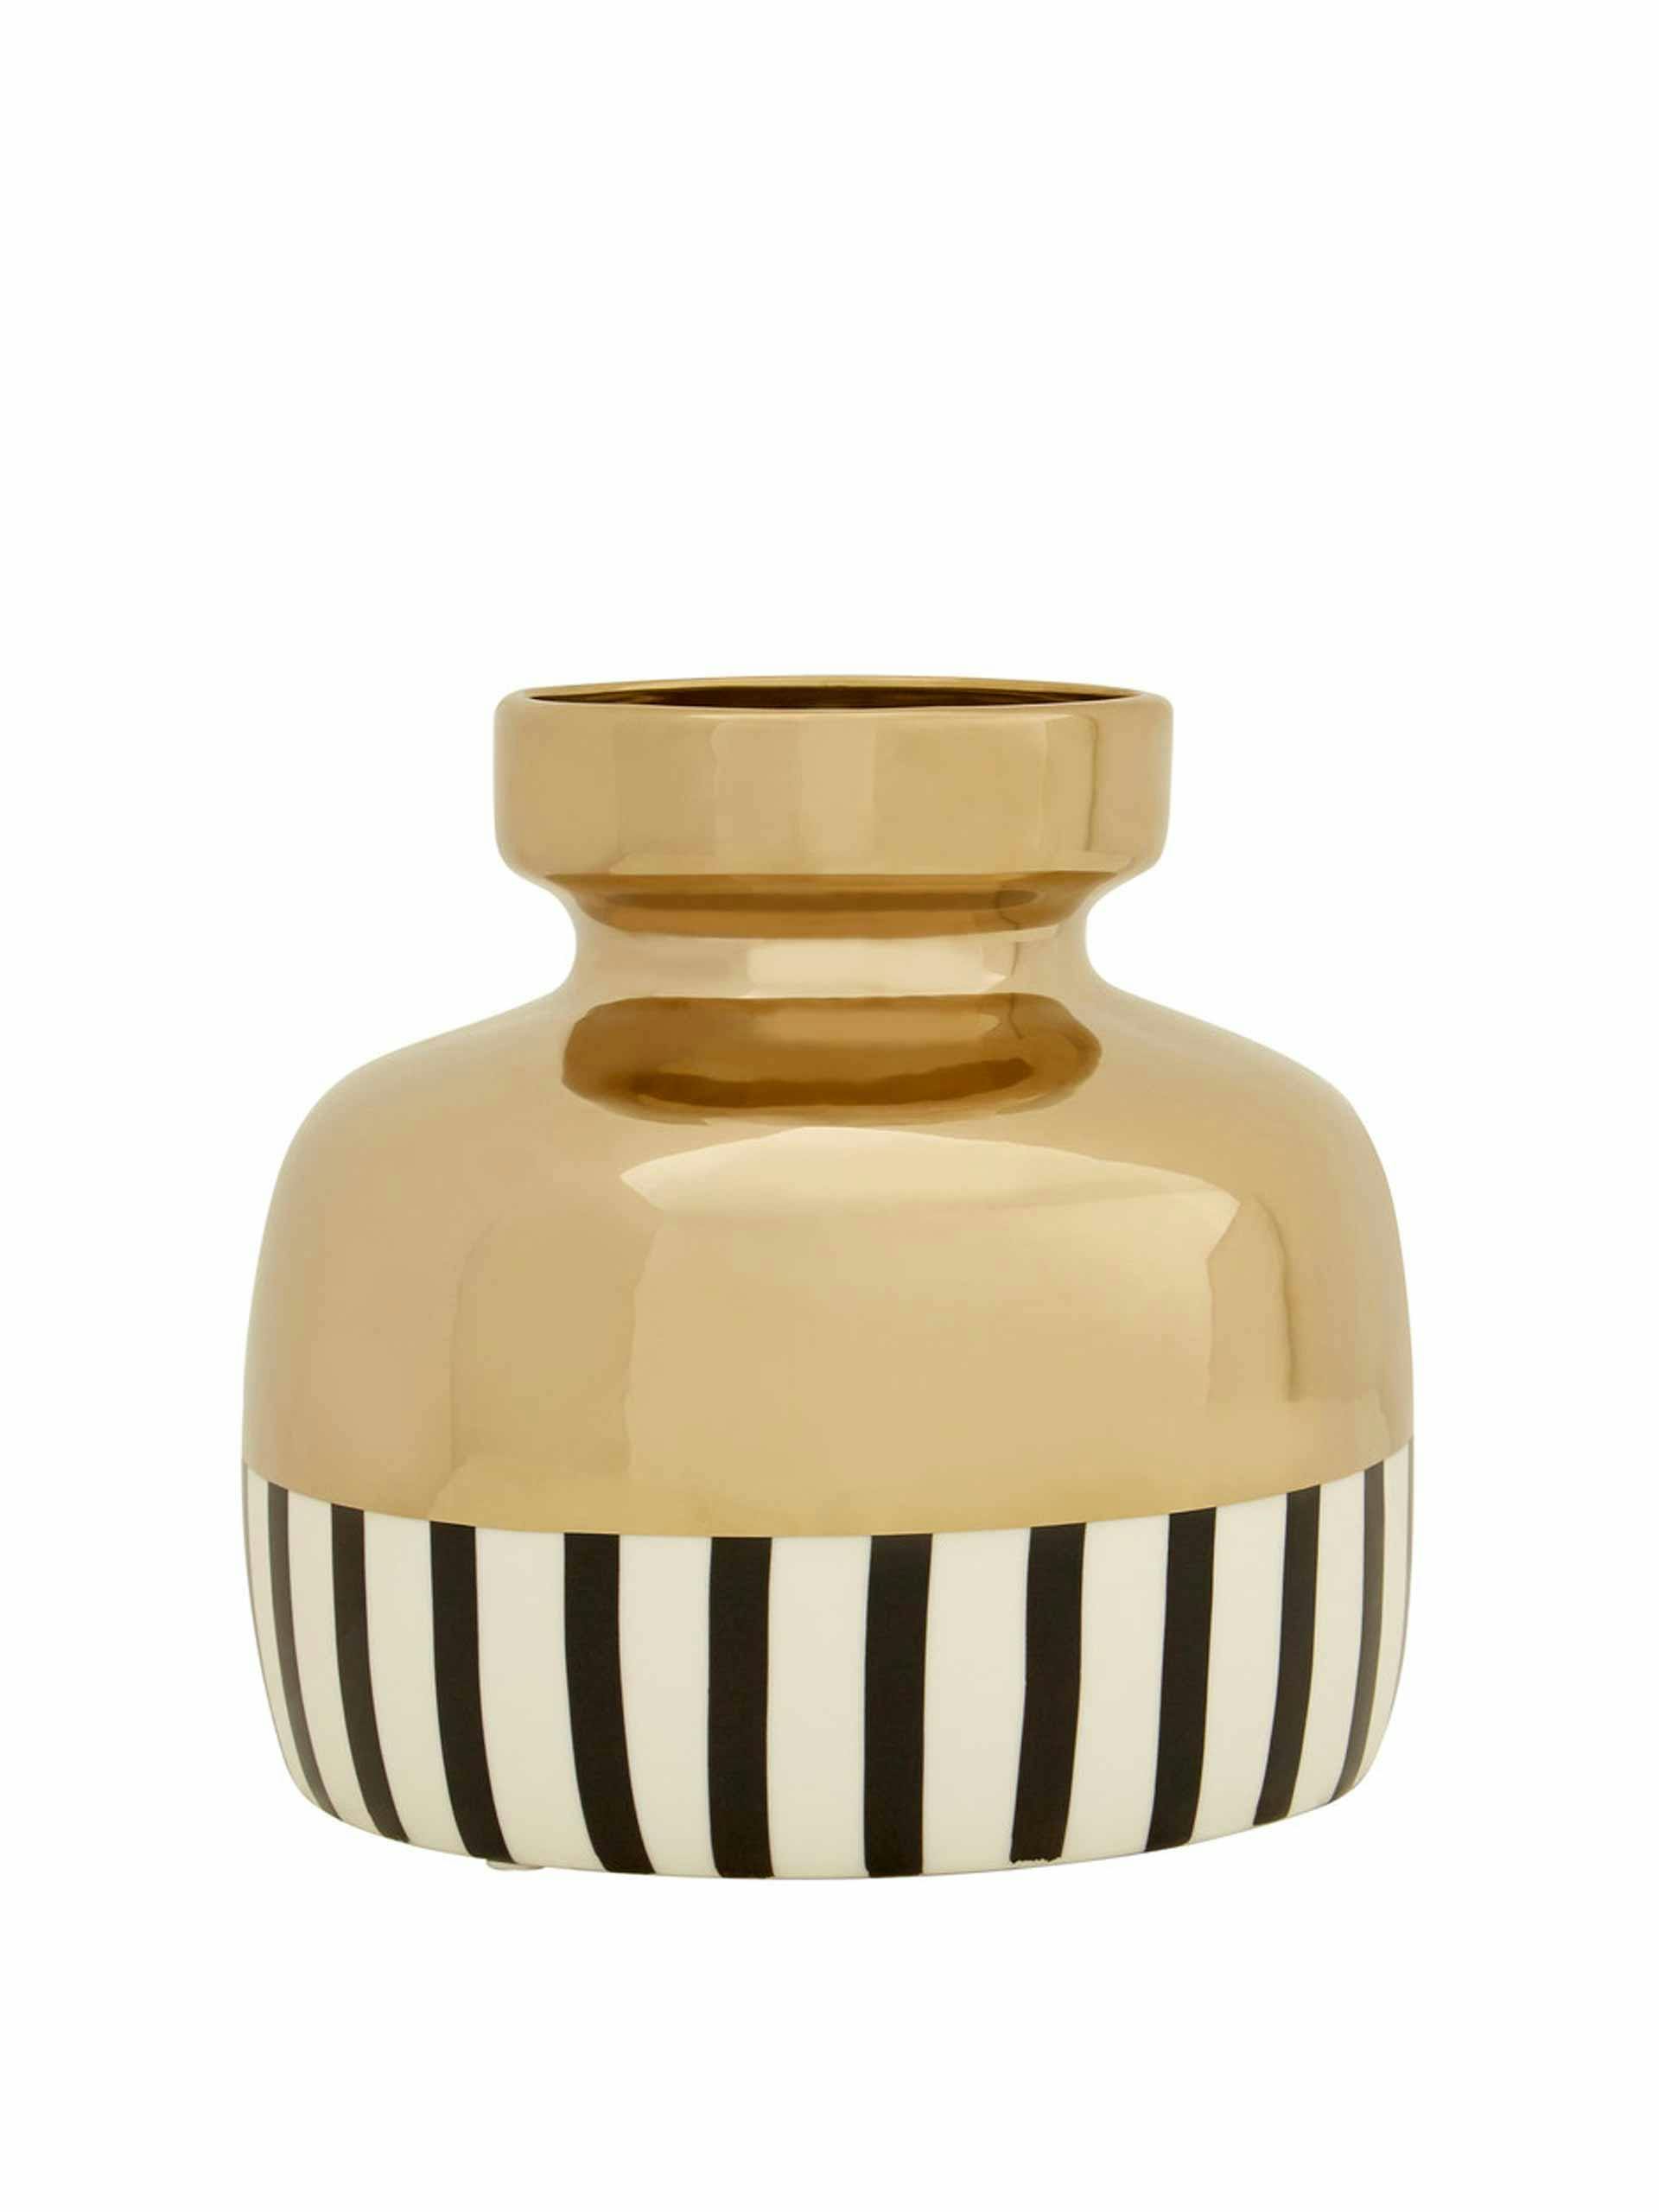 Gold ceramic vase with black and white stripes